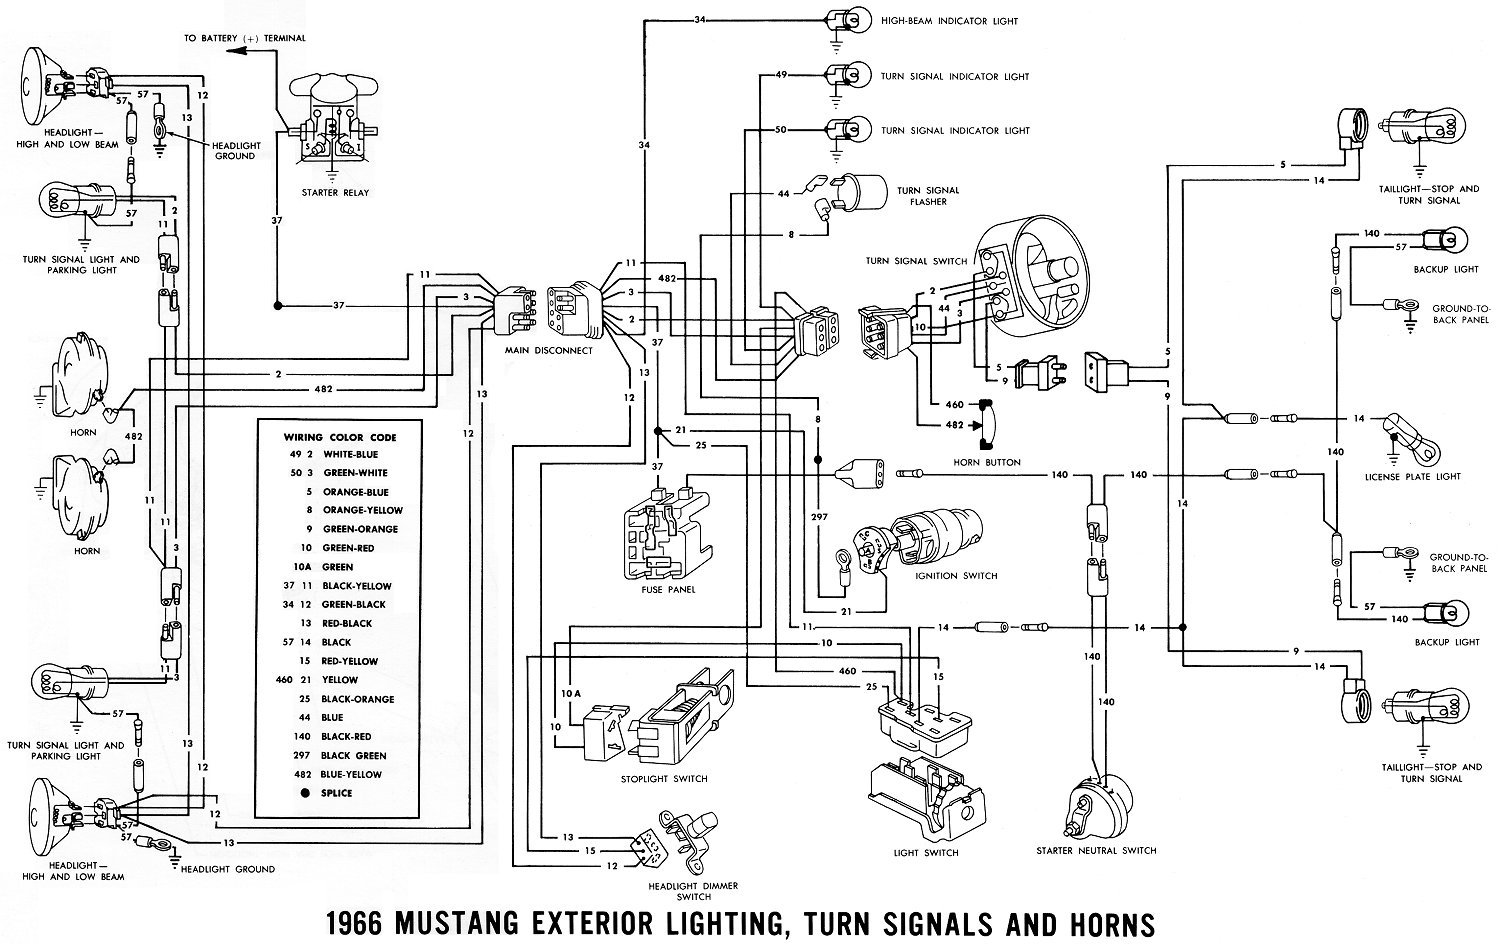 1986 Mustang Headlight Wiring Diagram from averagejoerestoration.com